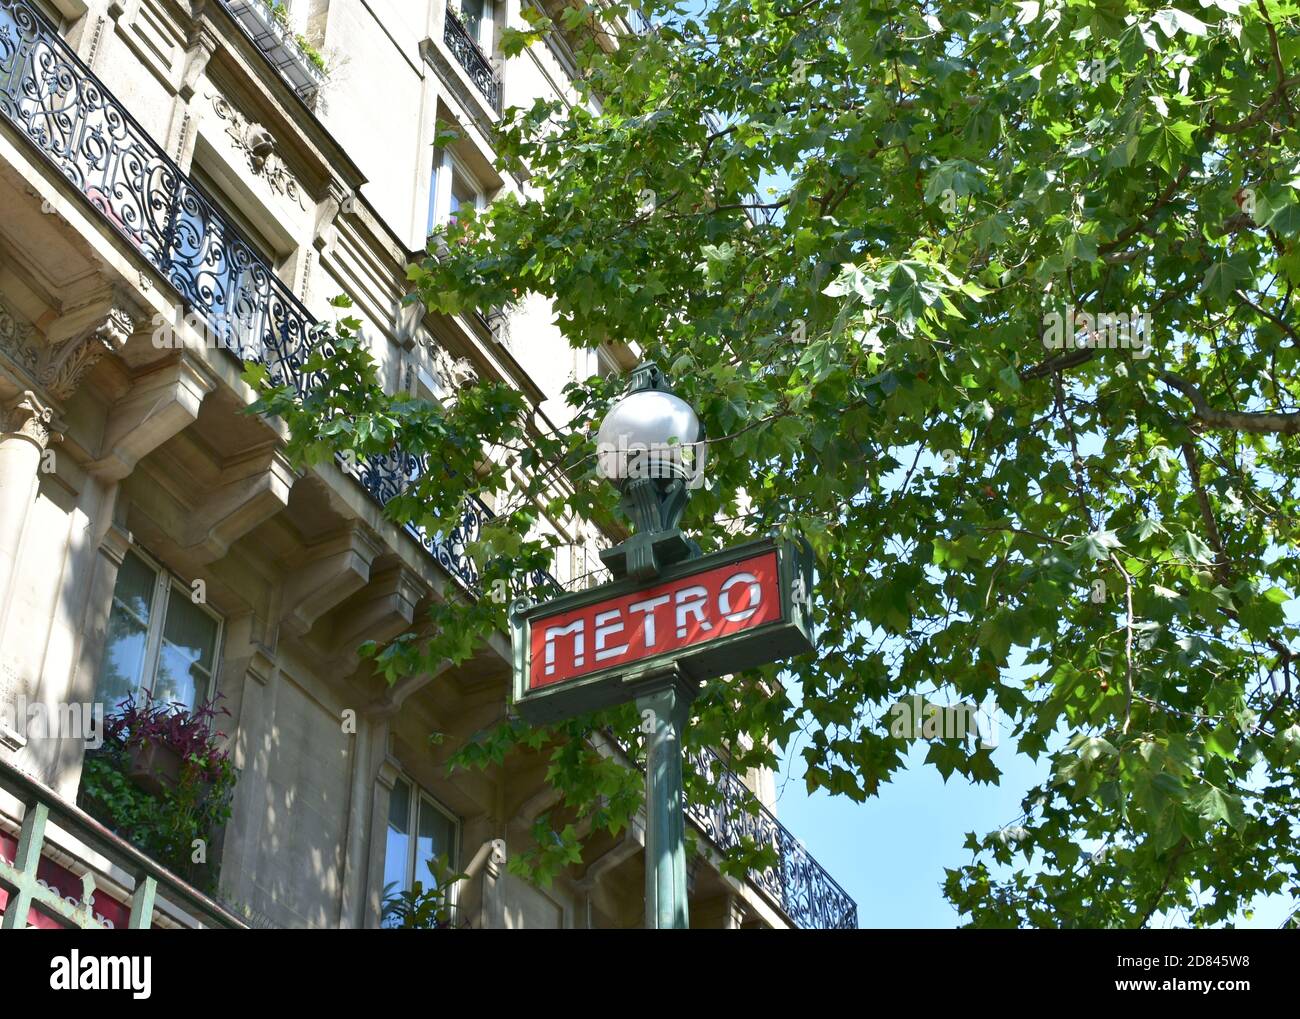 Indicazioni per la metropolitana di Parigi alla stazione della metropolitana. Parigi, Francia. Foto Stock